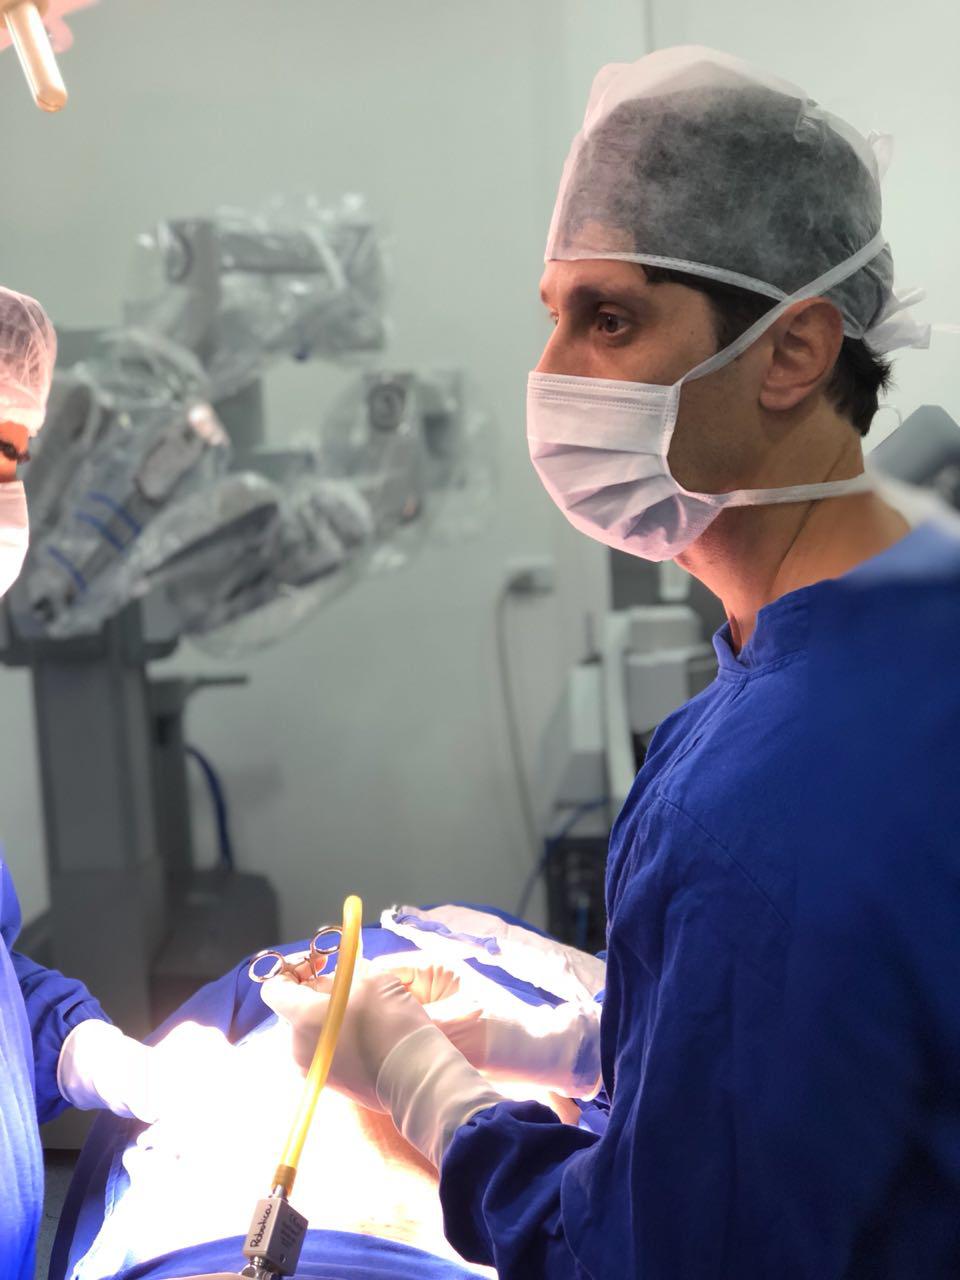 dr giovanni targa realizando cirurgia oncológica robótica